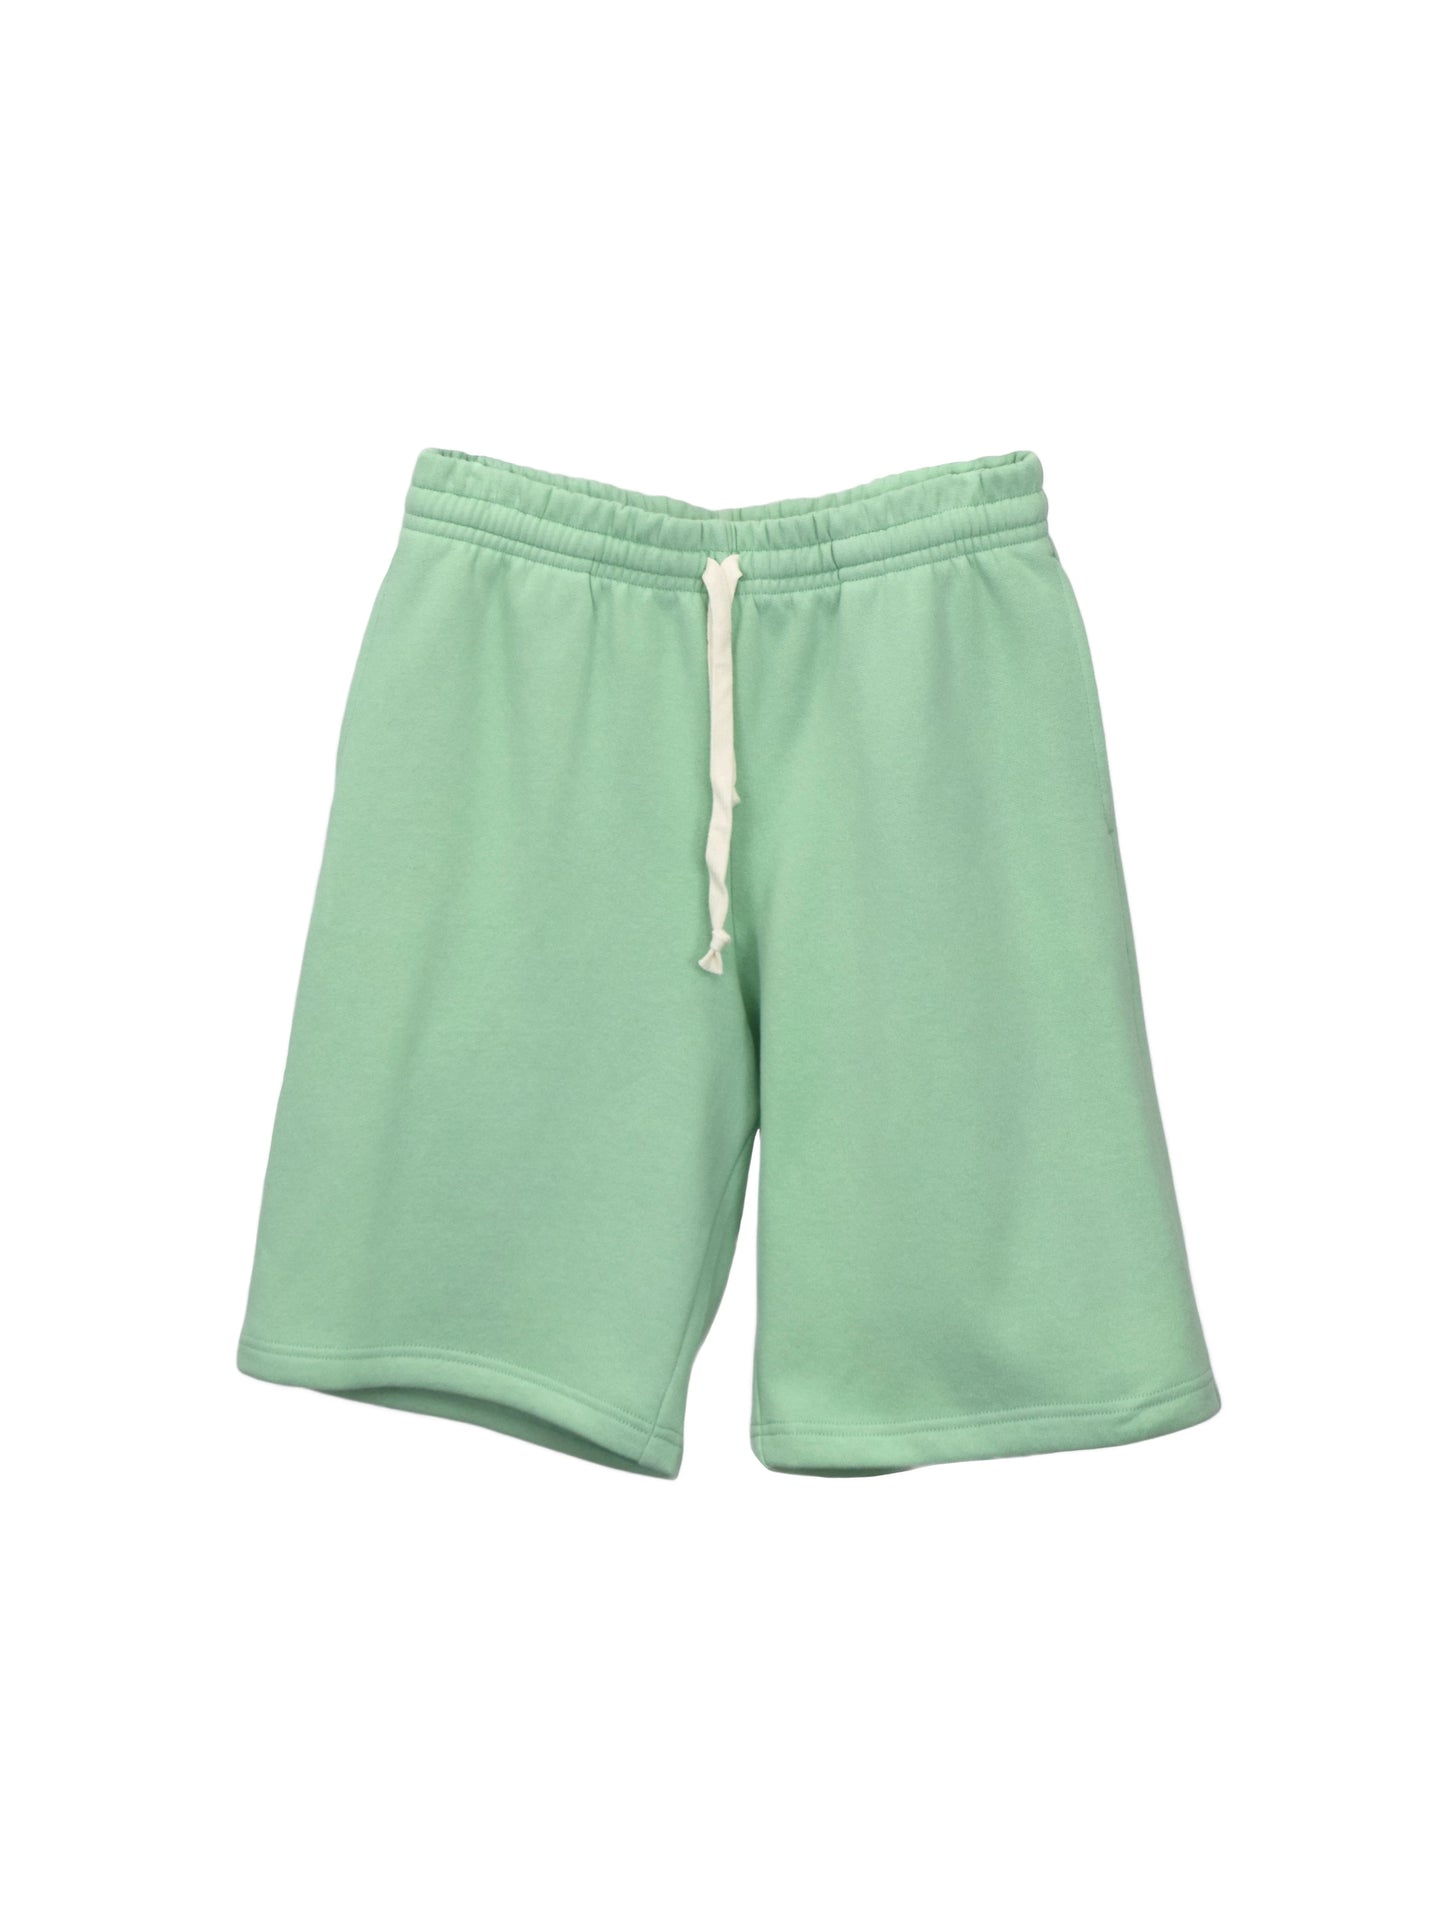 Mint Green Fleece Long Shorts with White Drawstrings